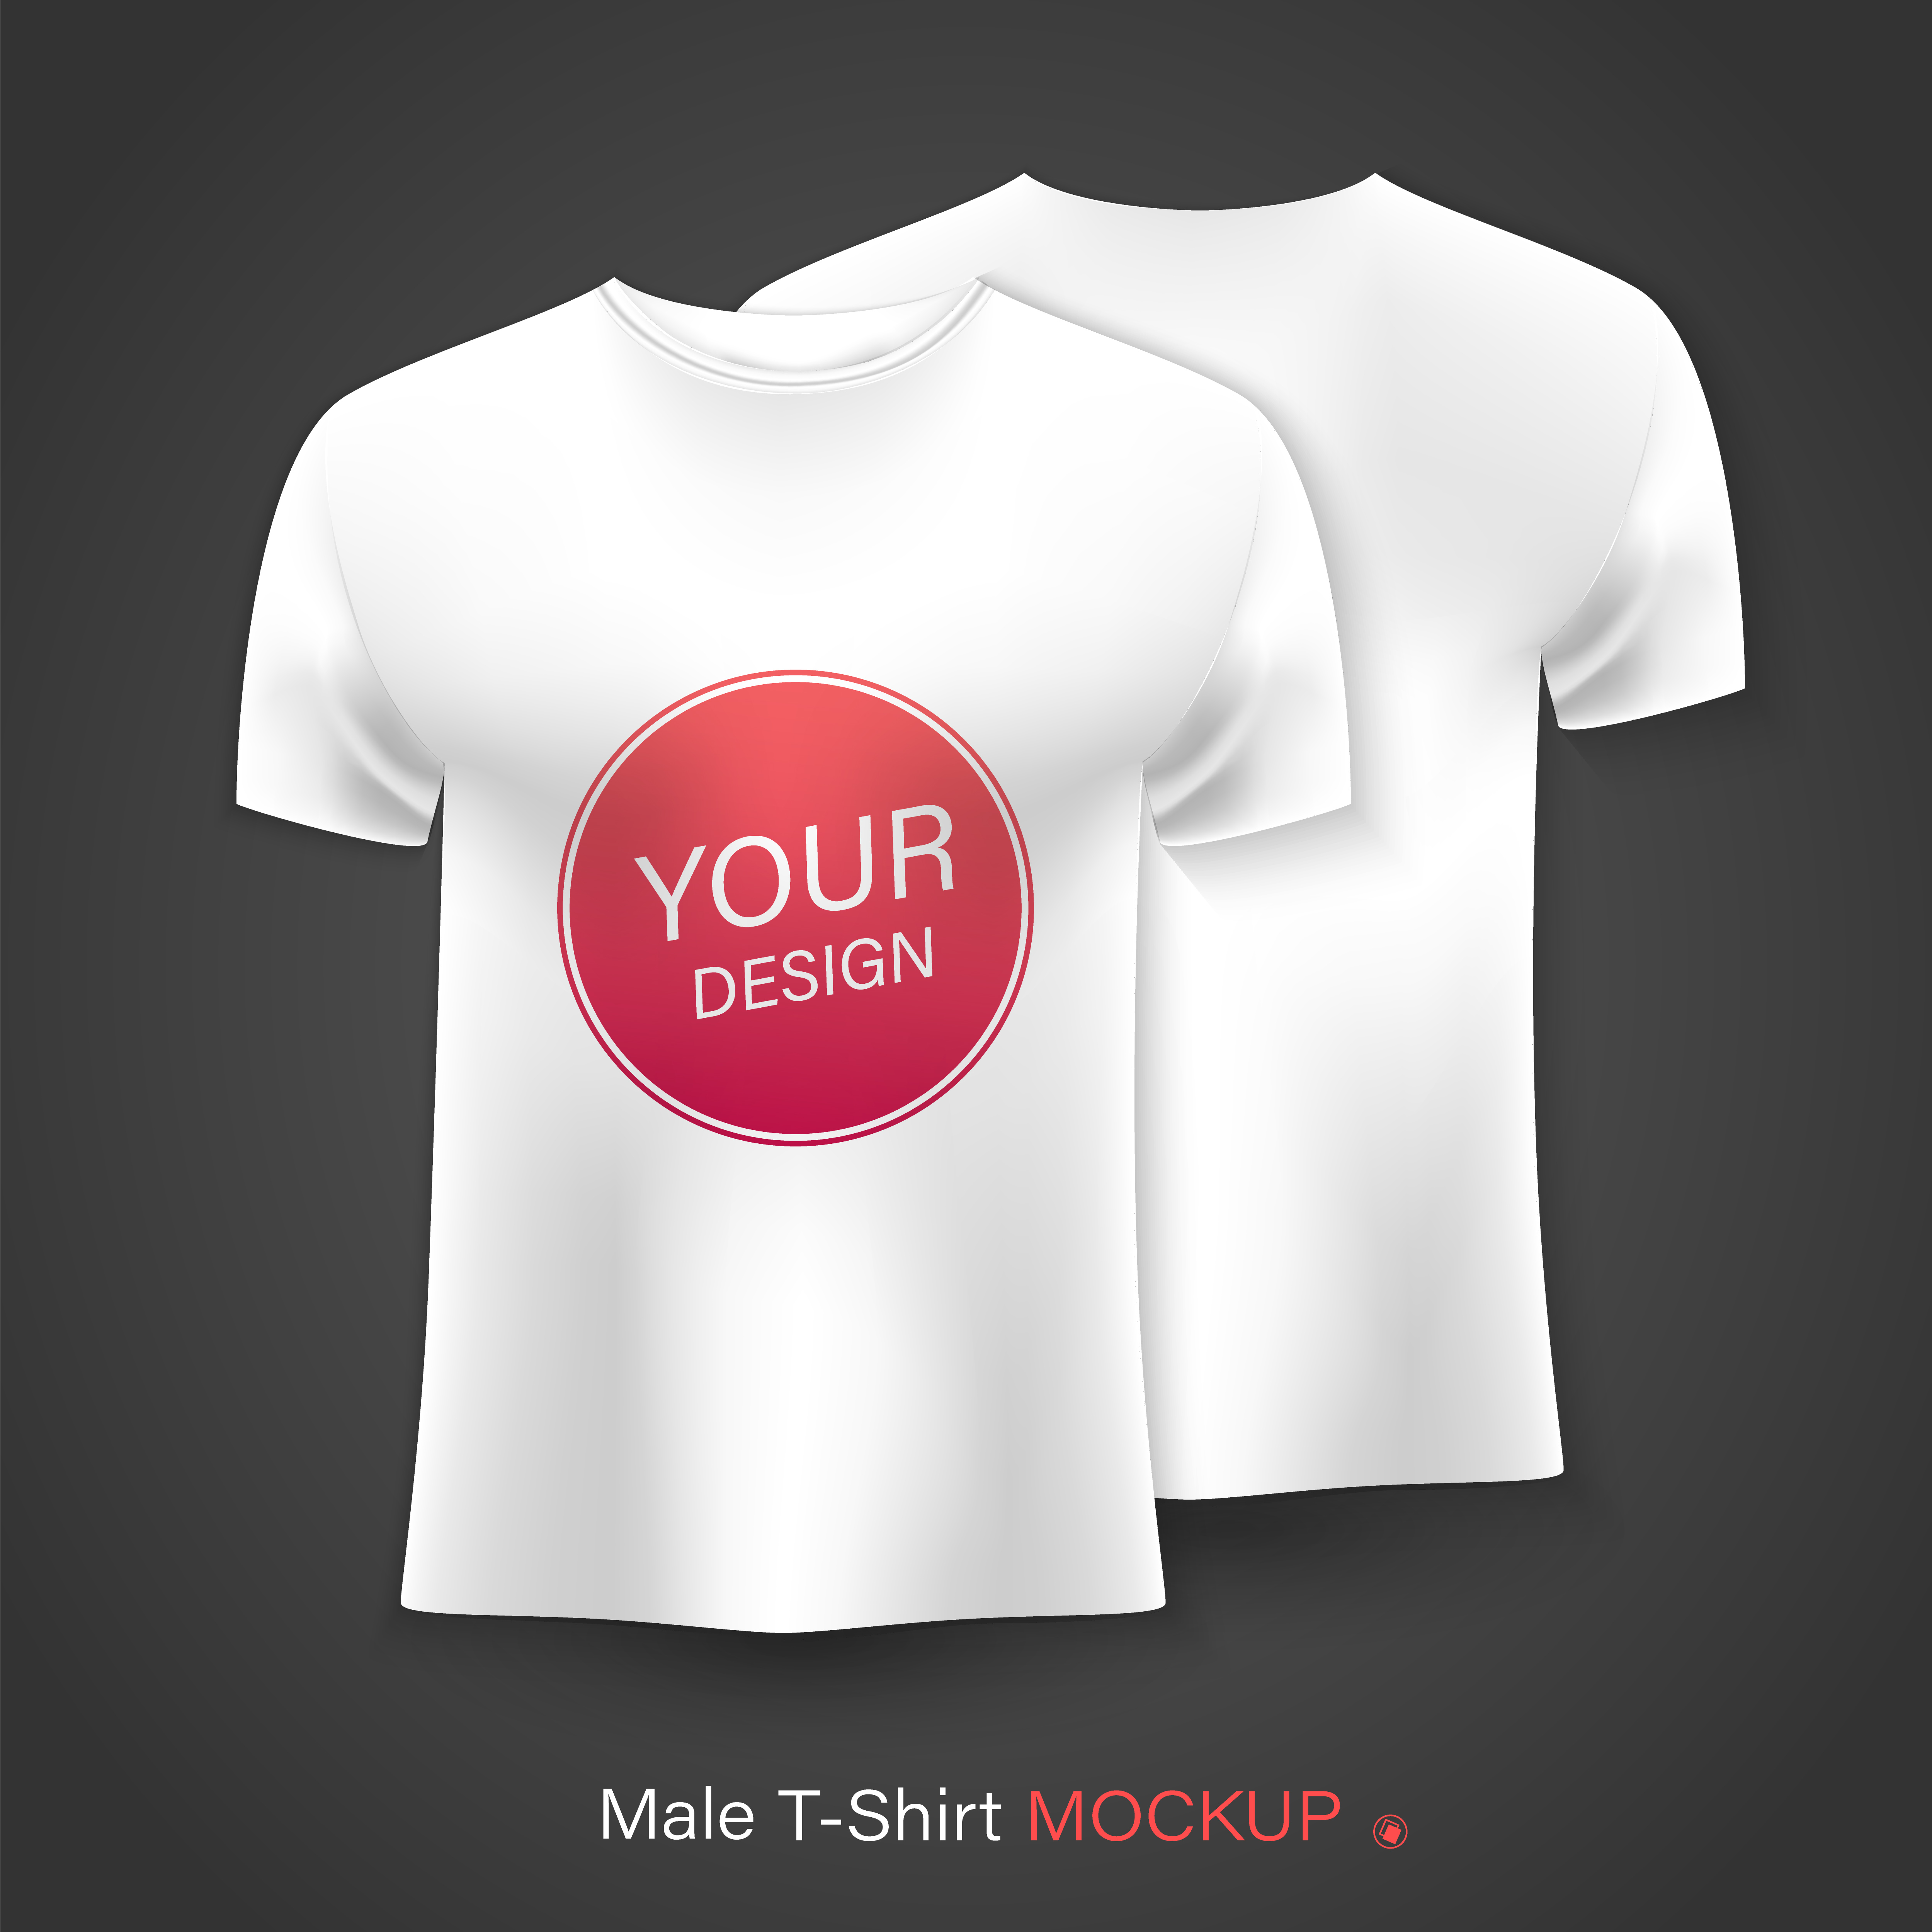 Download male t-shirt mockup Vector - Download Free Vector Art ...